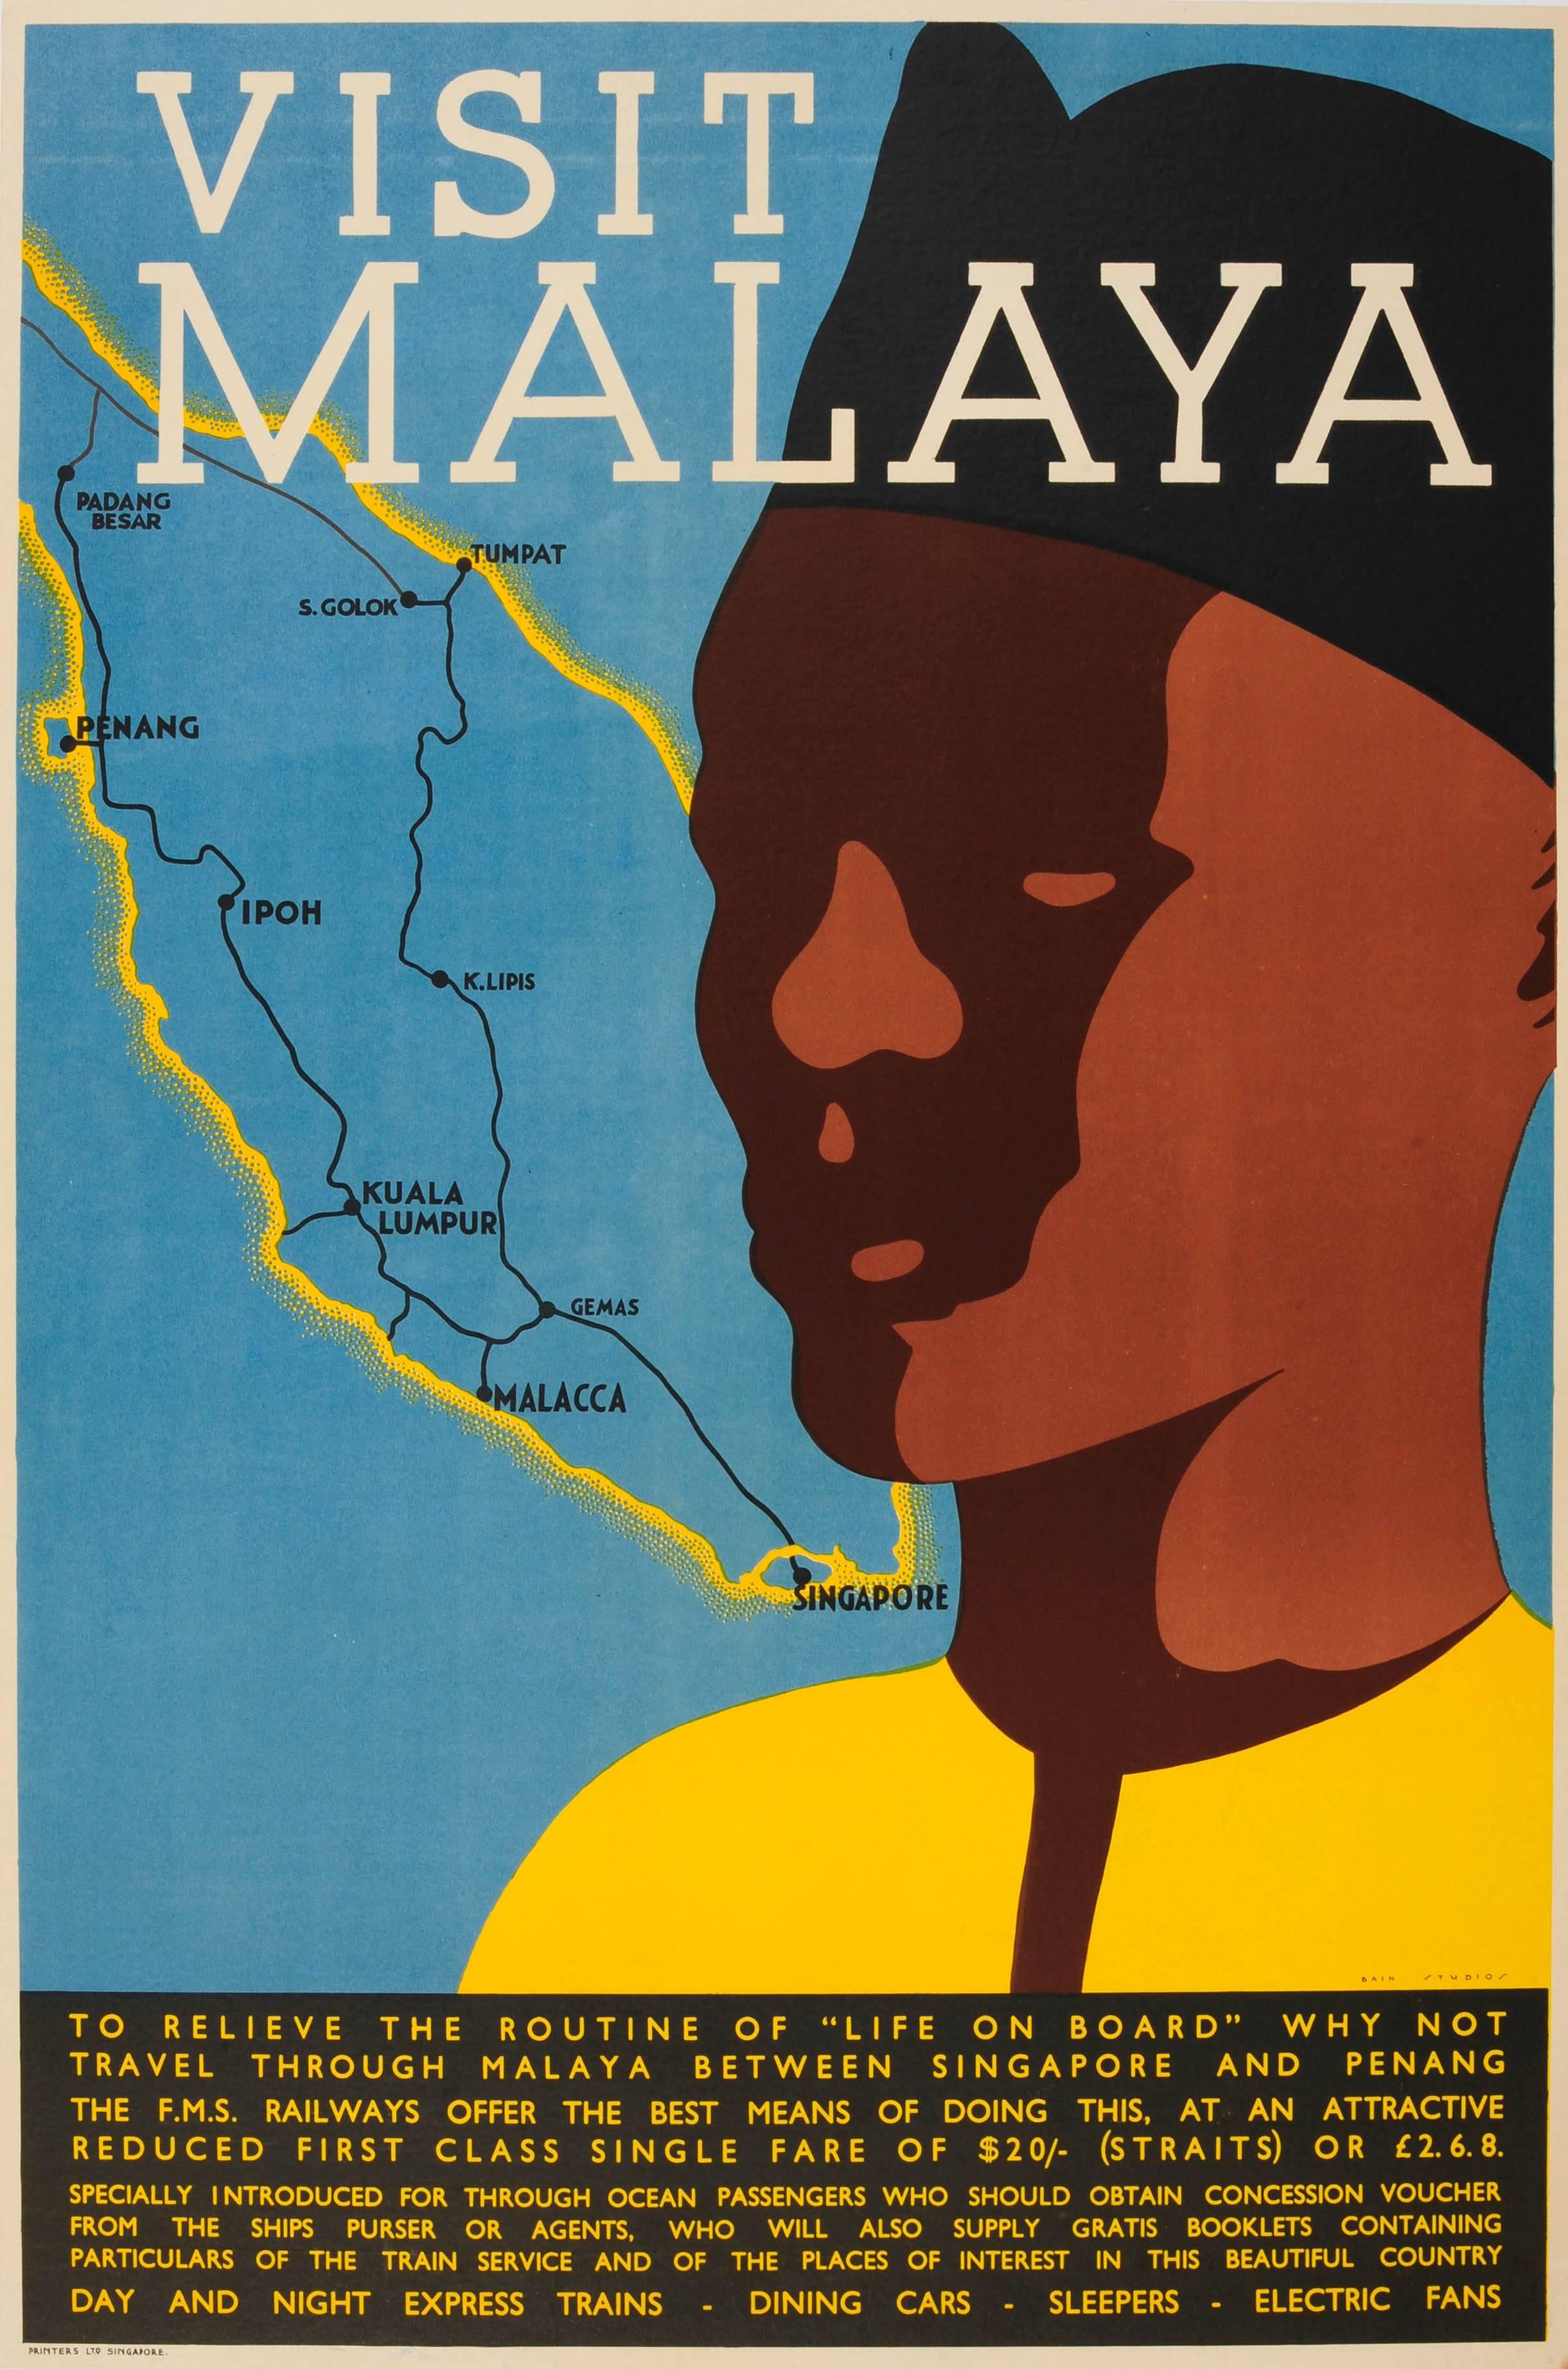 Bain Studio Print - Original FMS Railways Travel Poster For Malaysia And Singapore - Visit Malaya